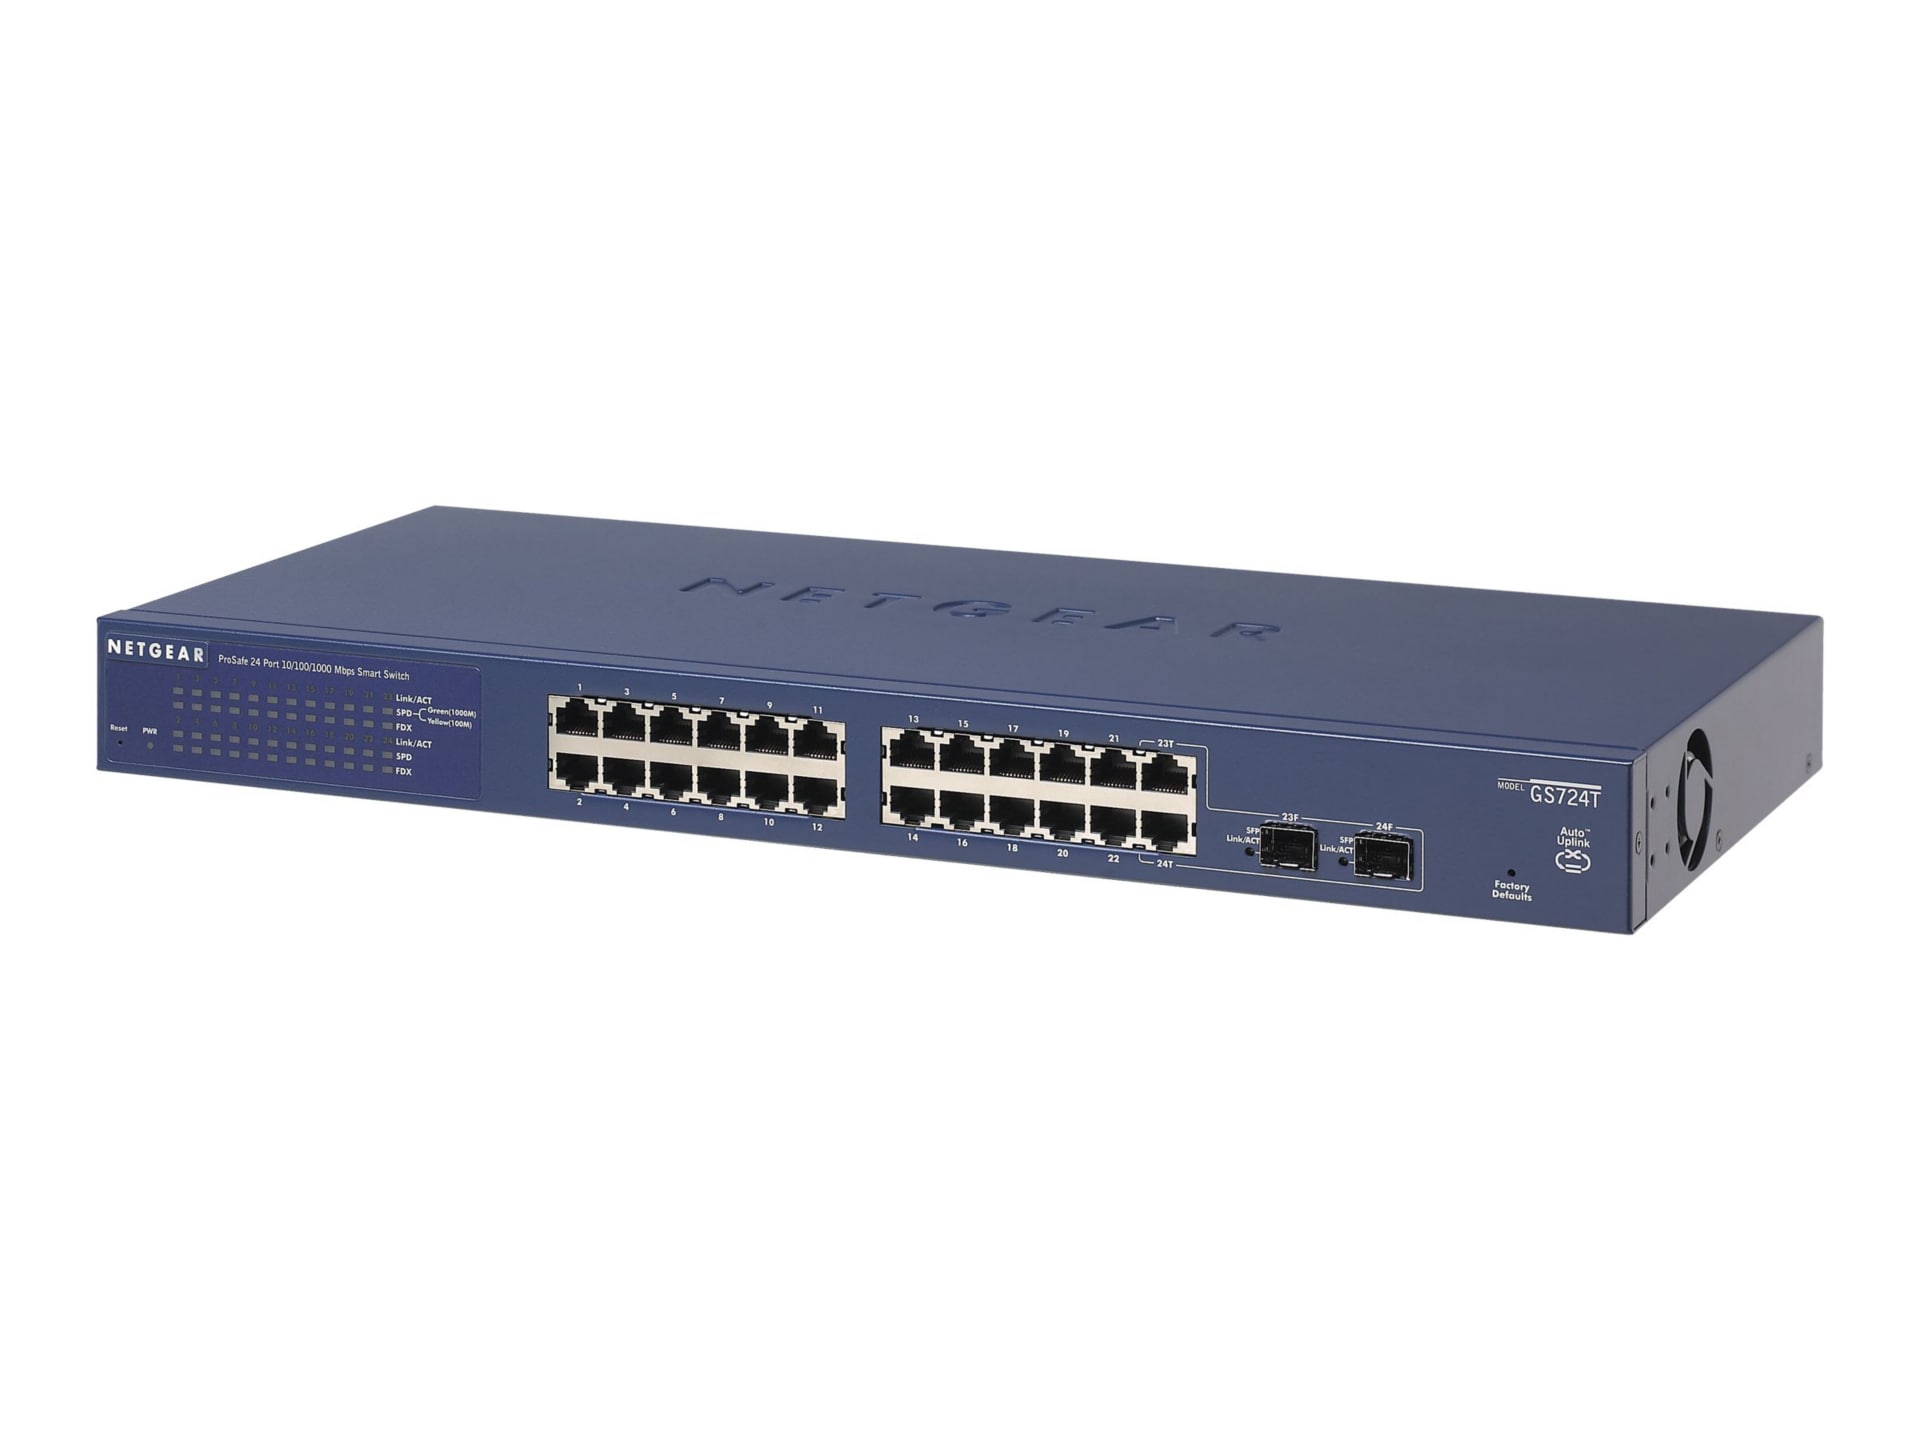 NETGEAR 24-Port Gigabit Smart Switch, - GS724Tv4 GS724T-400NAS Switches - Ethernet